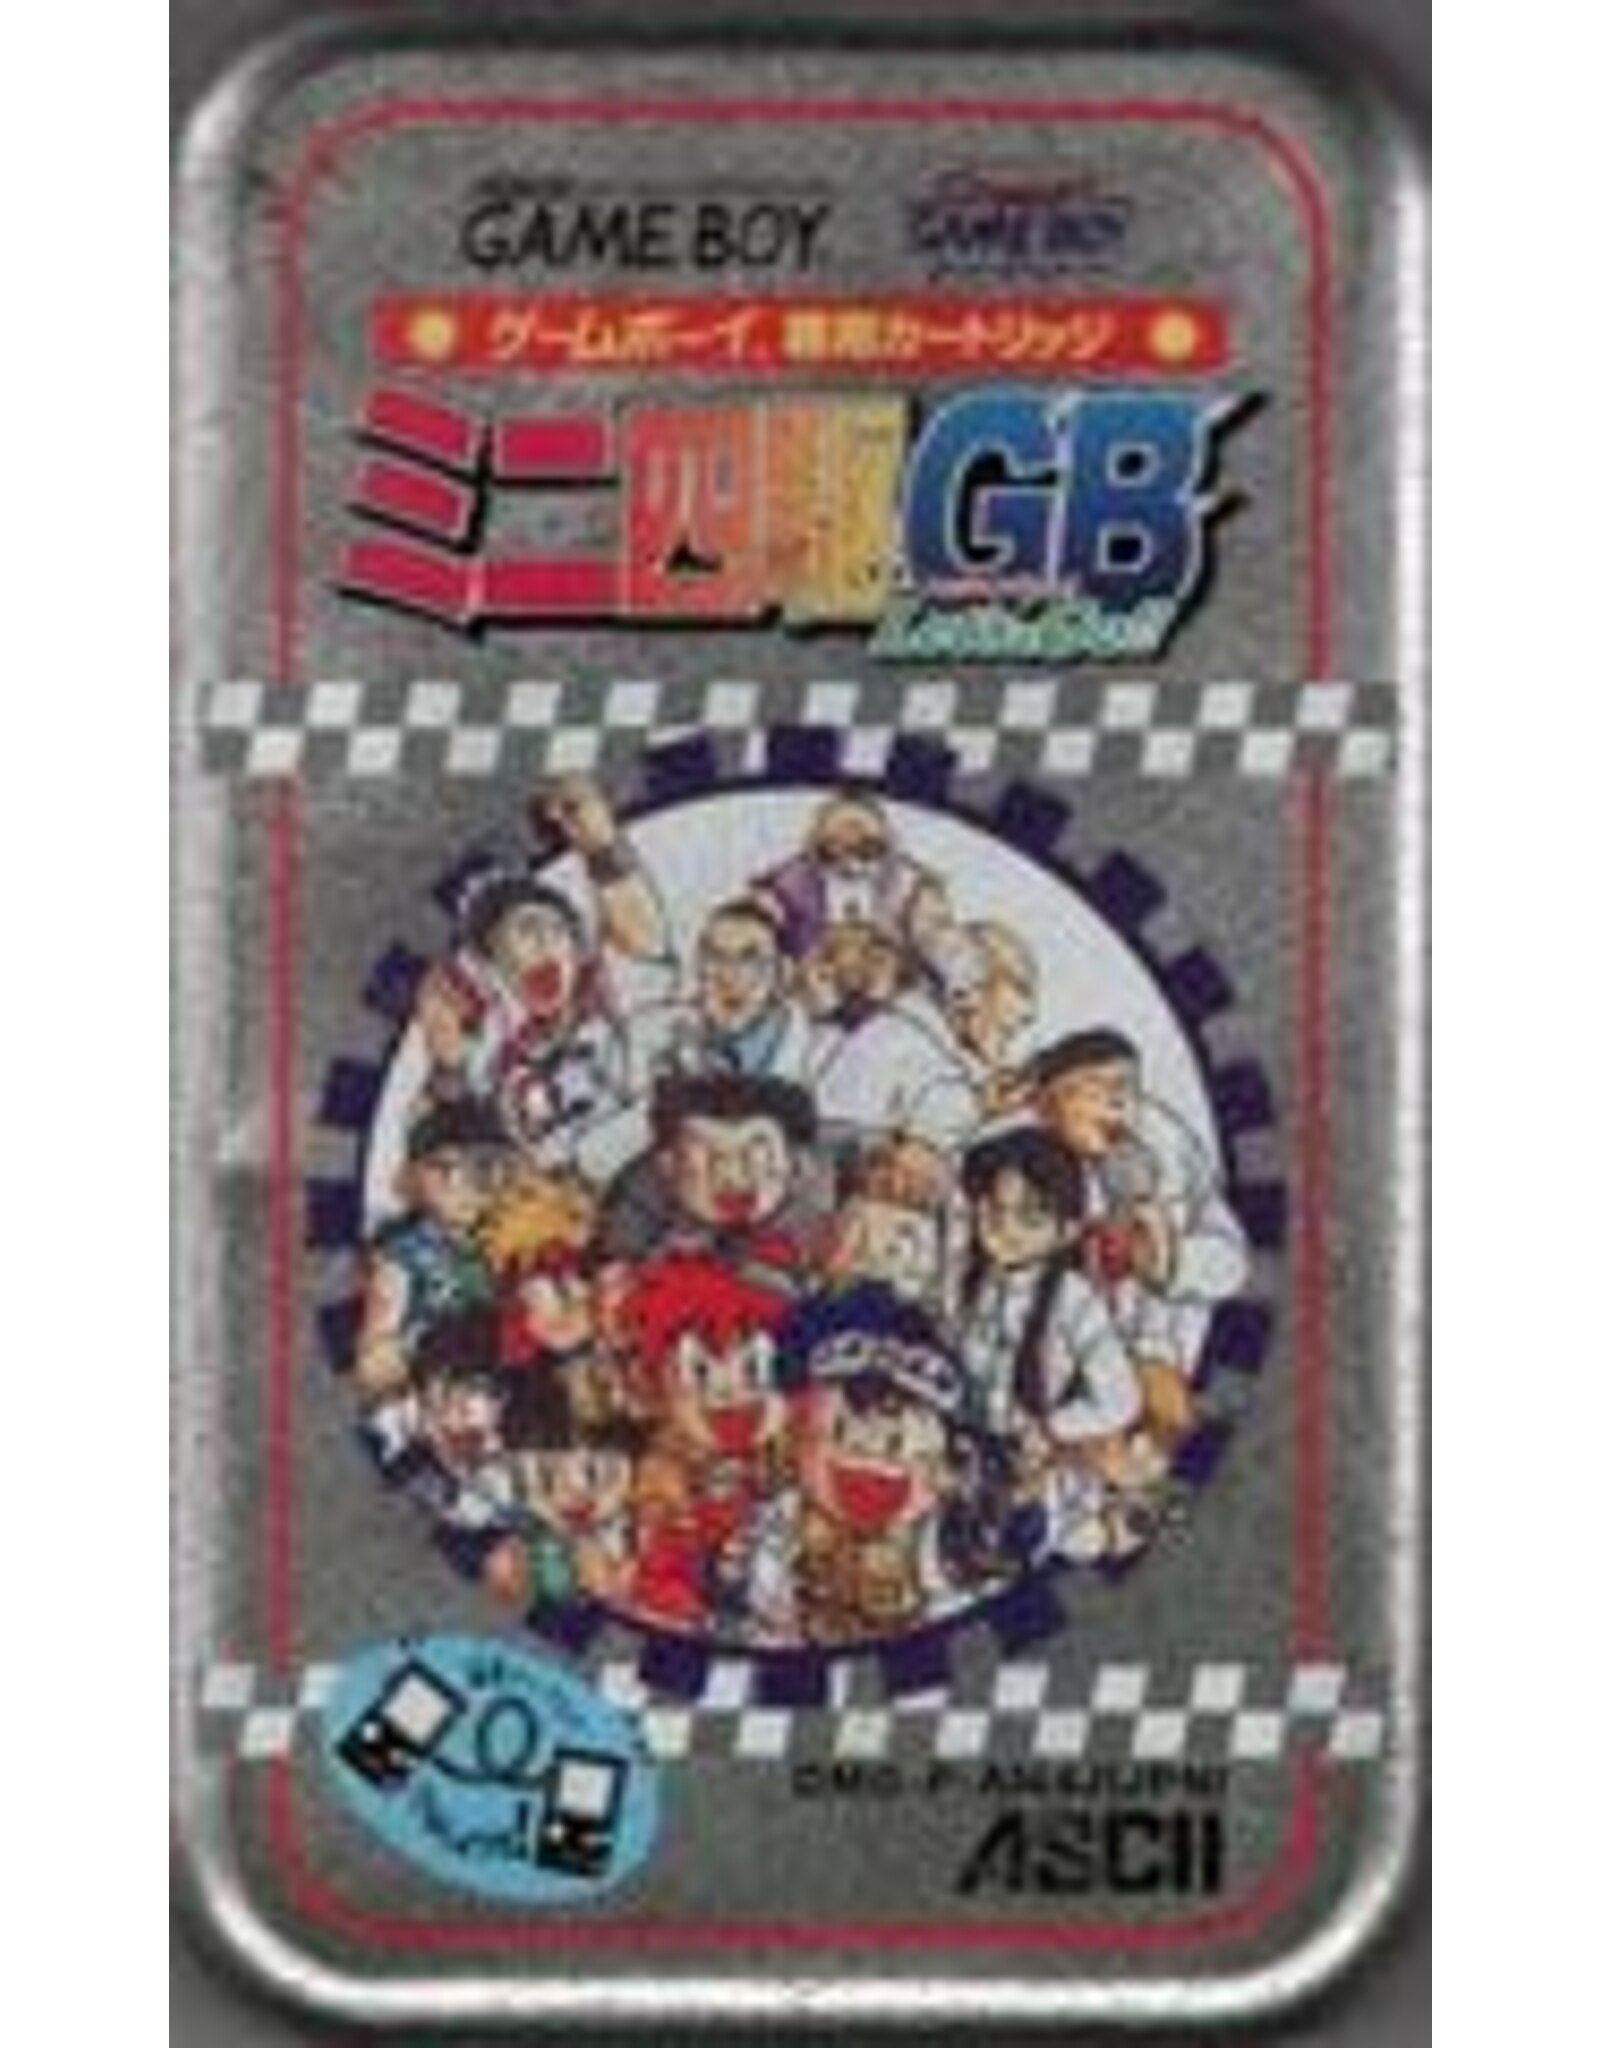 Game Boy Mini-Yonku GB: Let's & Go (Cart Only, JP Import)